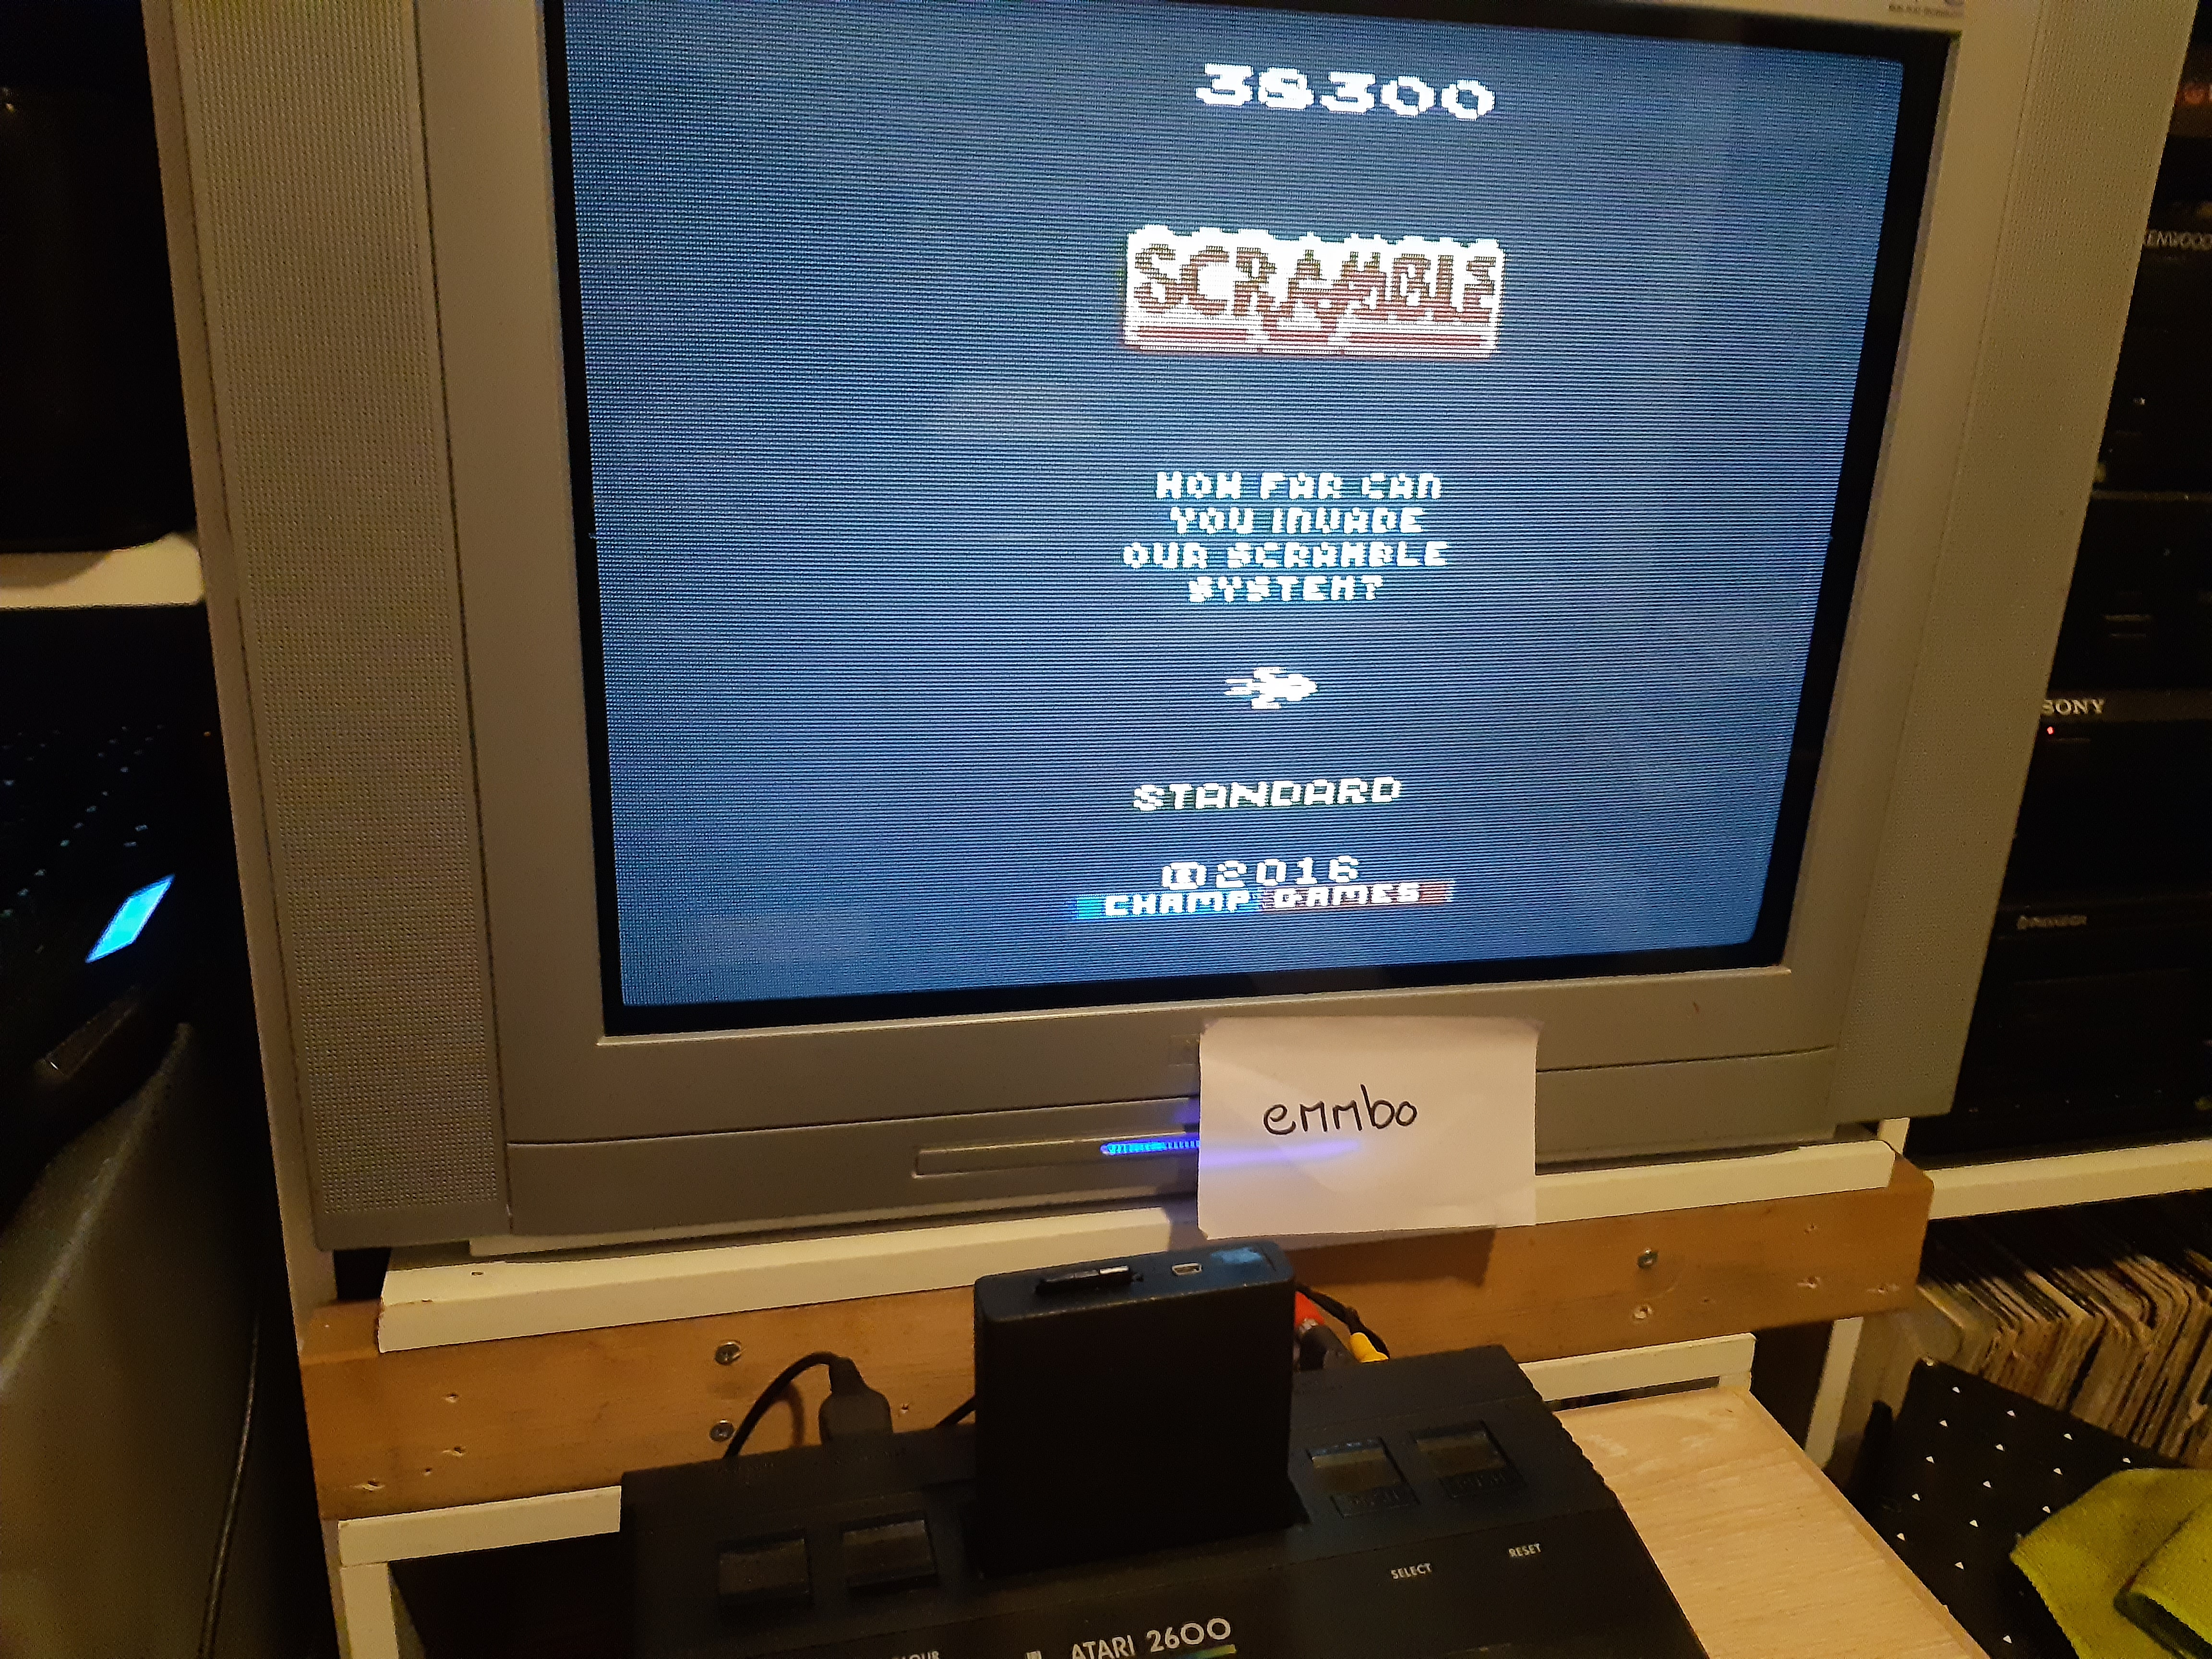 emmbo: Scramble [Standard] (Atari 2600) 38,300 points on 2020-03-02 12:46:46